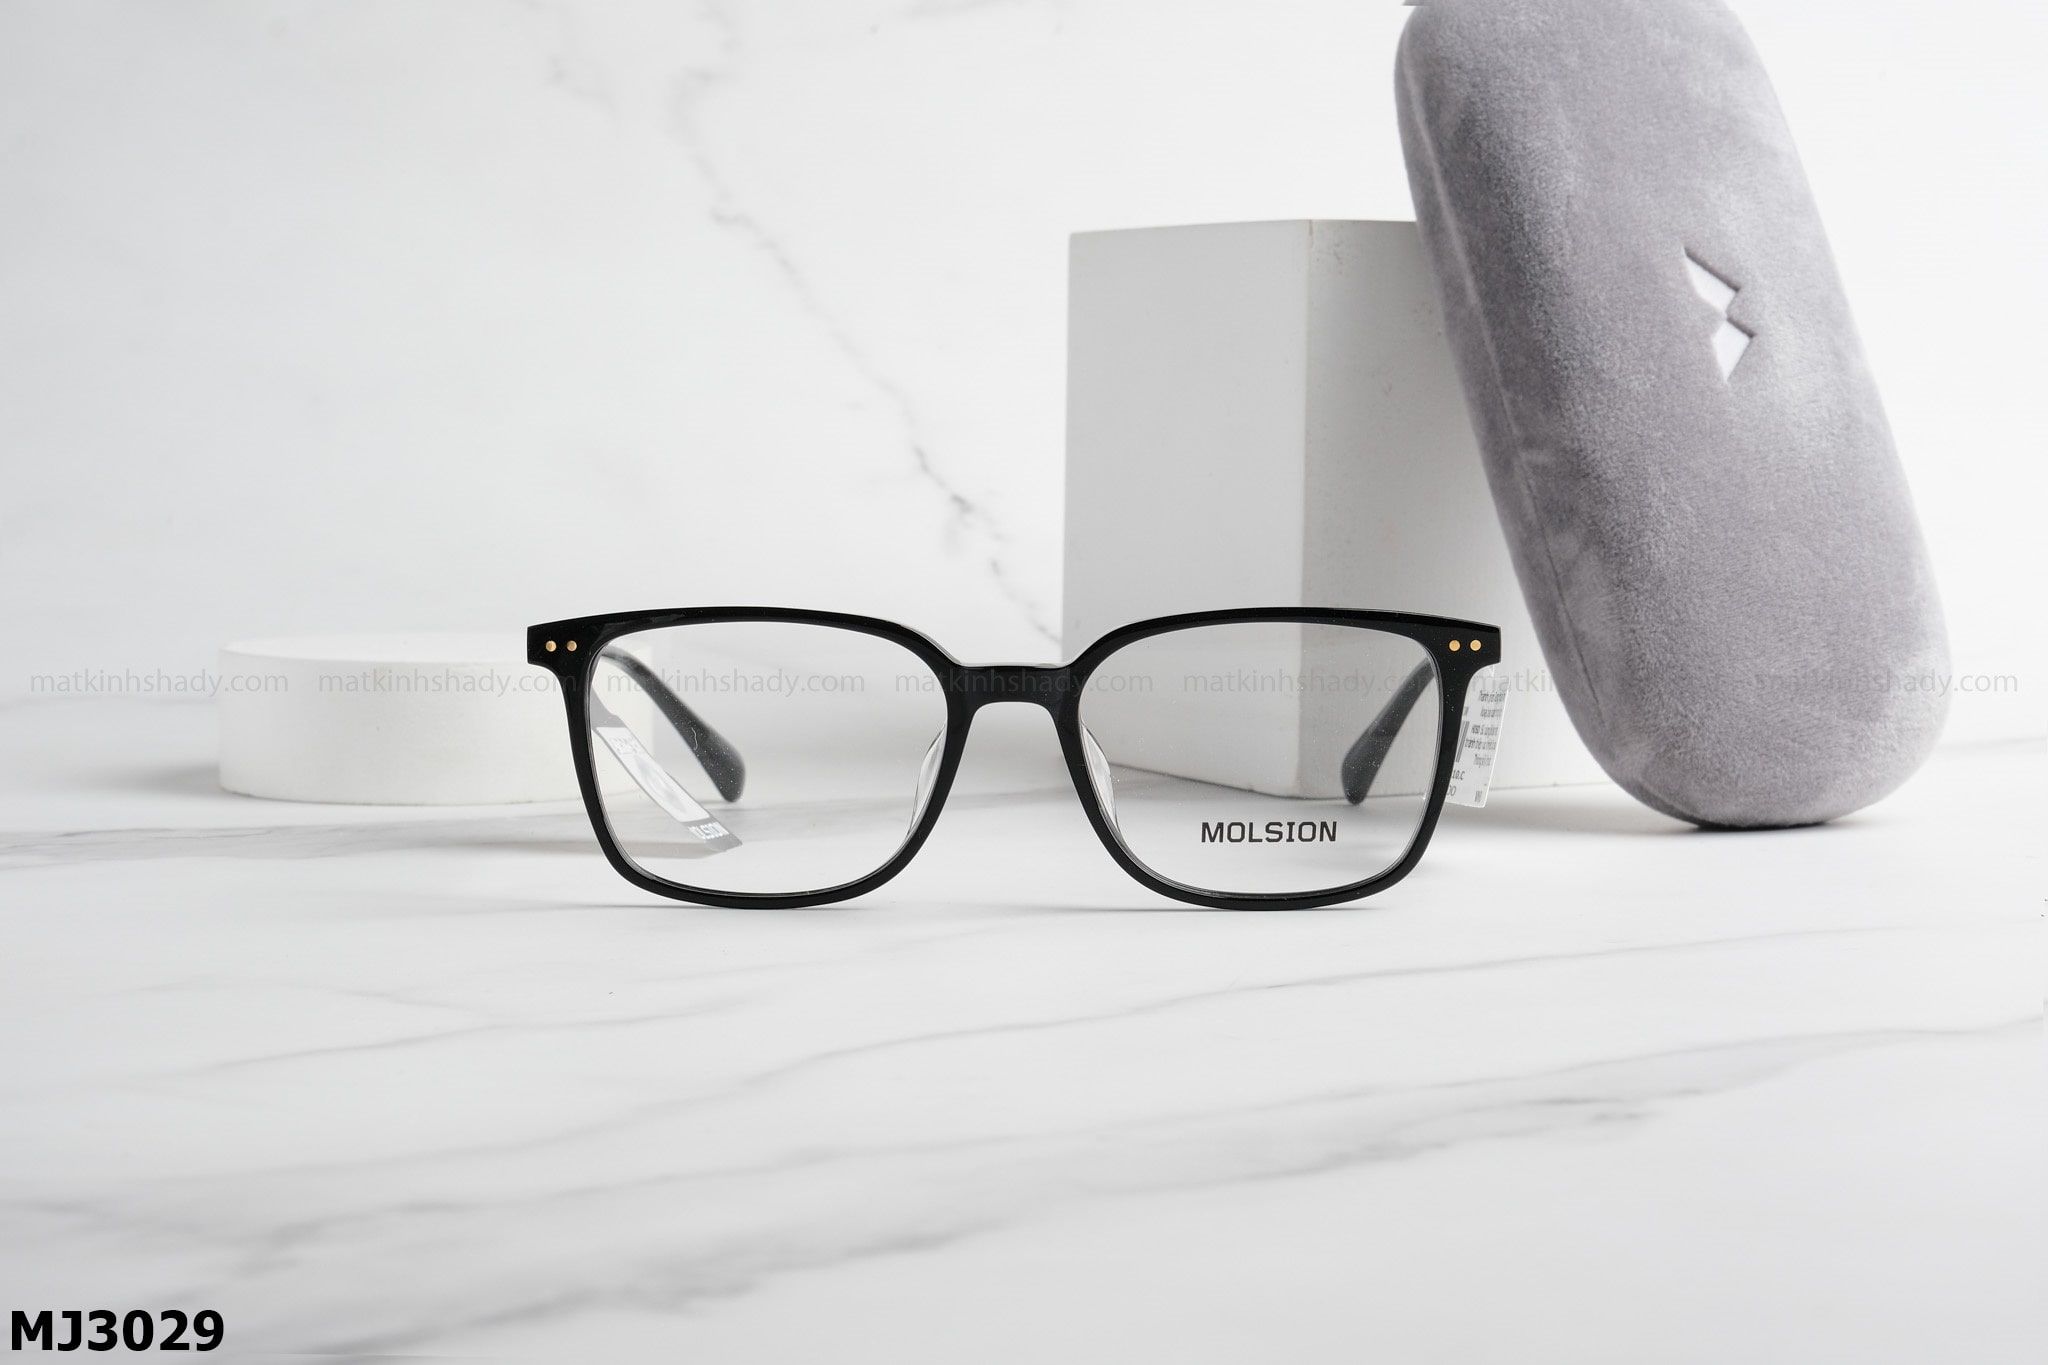  Molsion Eyewear - Glasses - MJ3029 